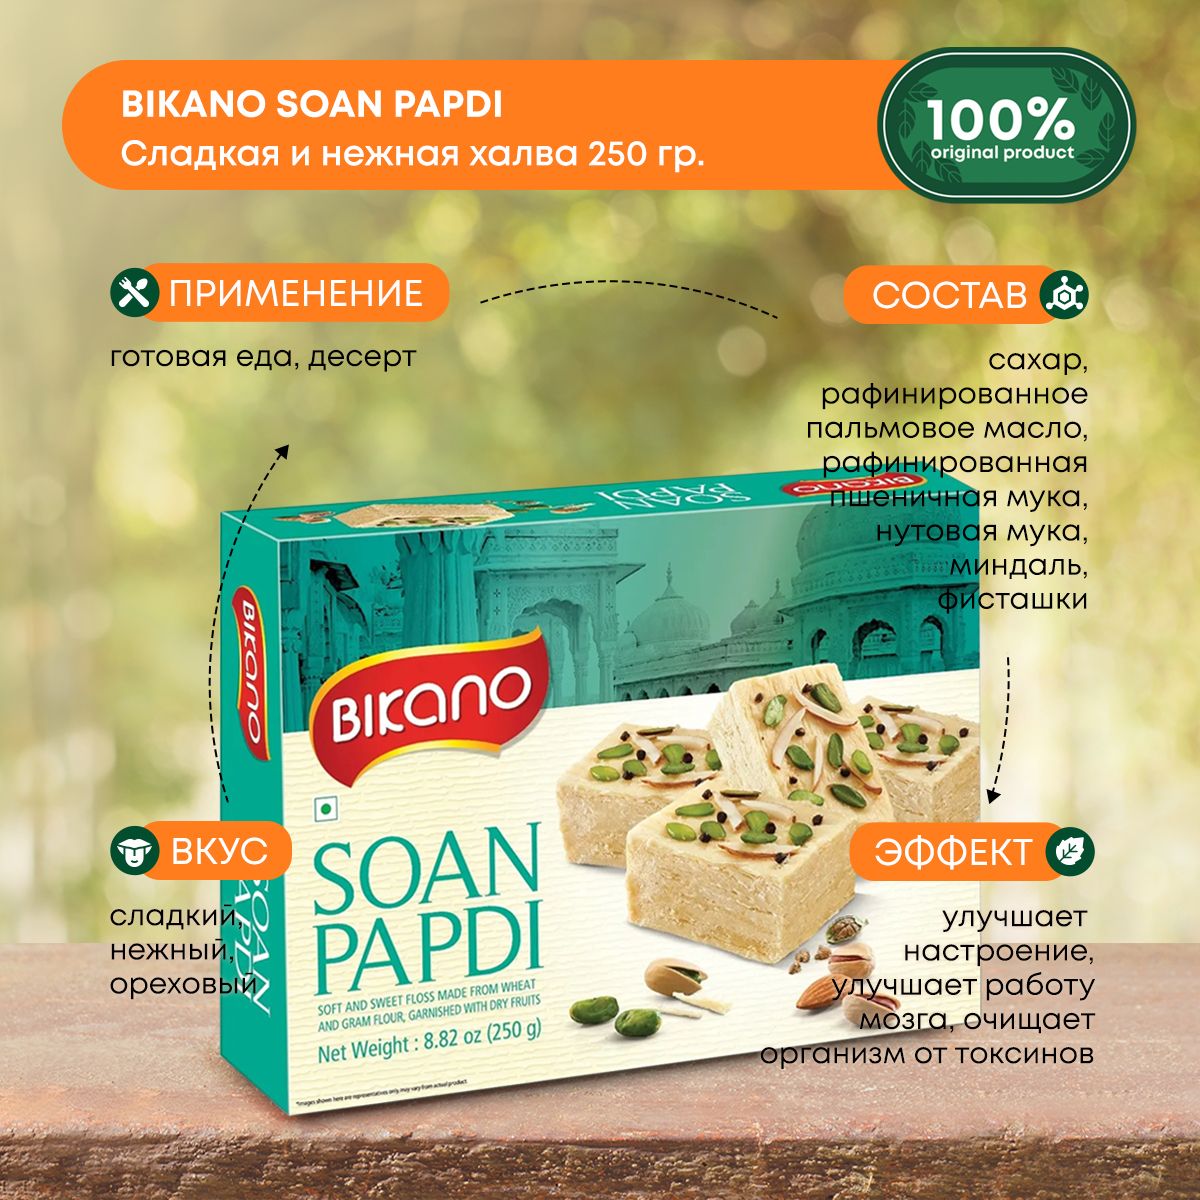 Premium Soan Papdi by Bikano Price - Buy Online at ₹142 in India